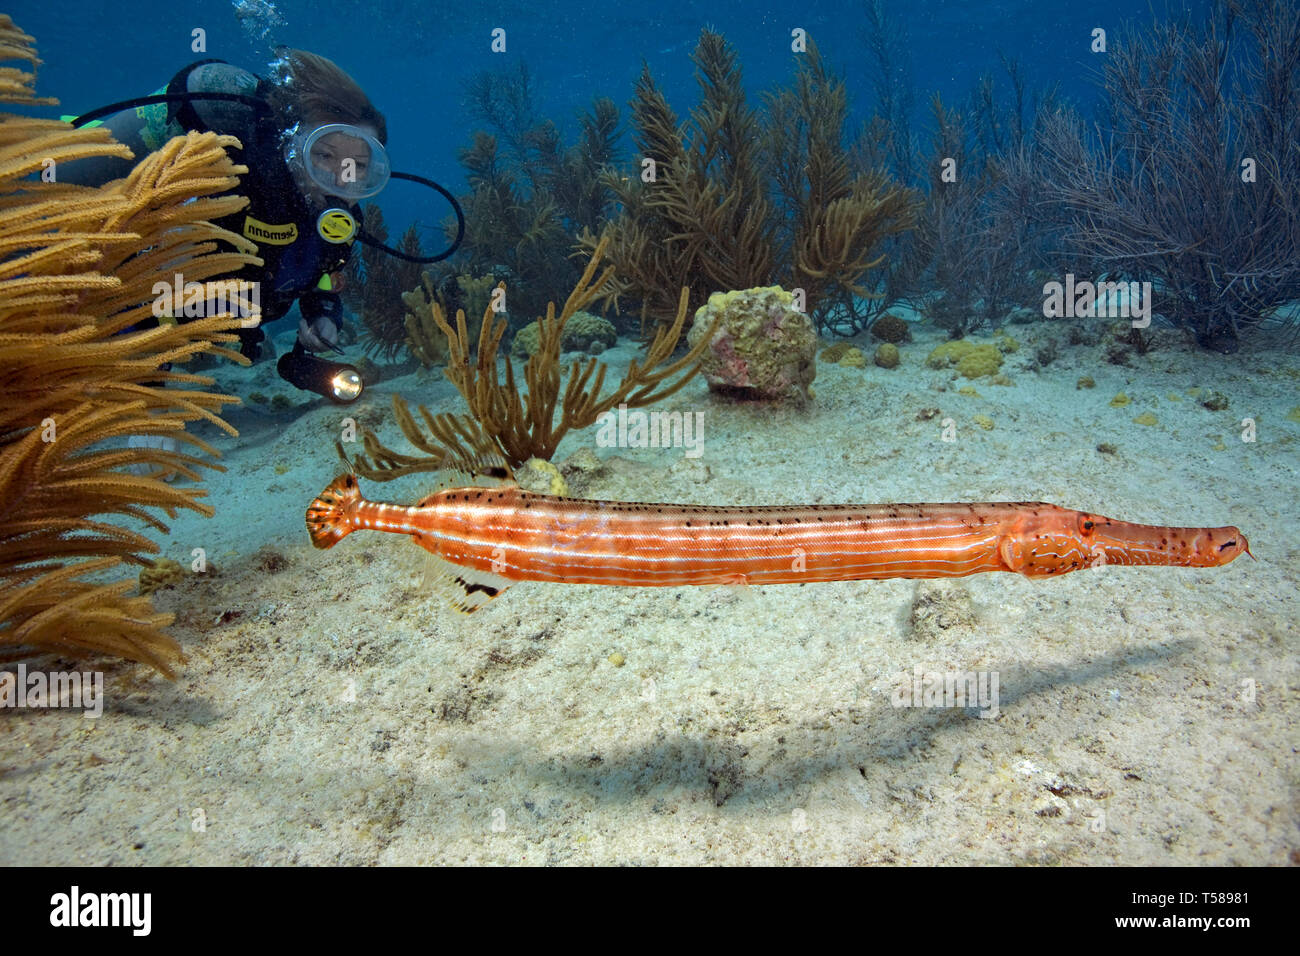 Atlantico occidentale trumpetfish o Trumpetfish (Aulostomus maculatus) e scuba diver, Bonaire, Antille olandesi, Caraibi Foto Stock